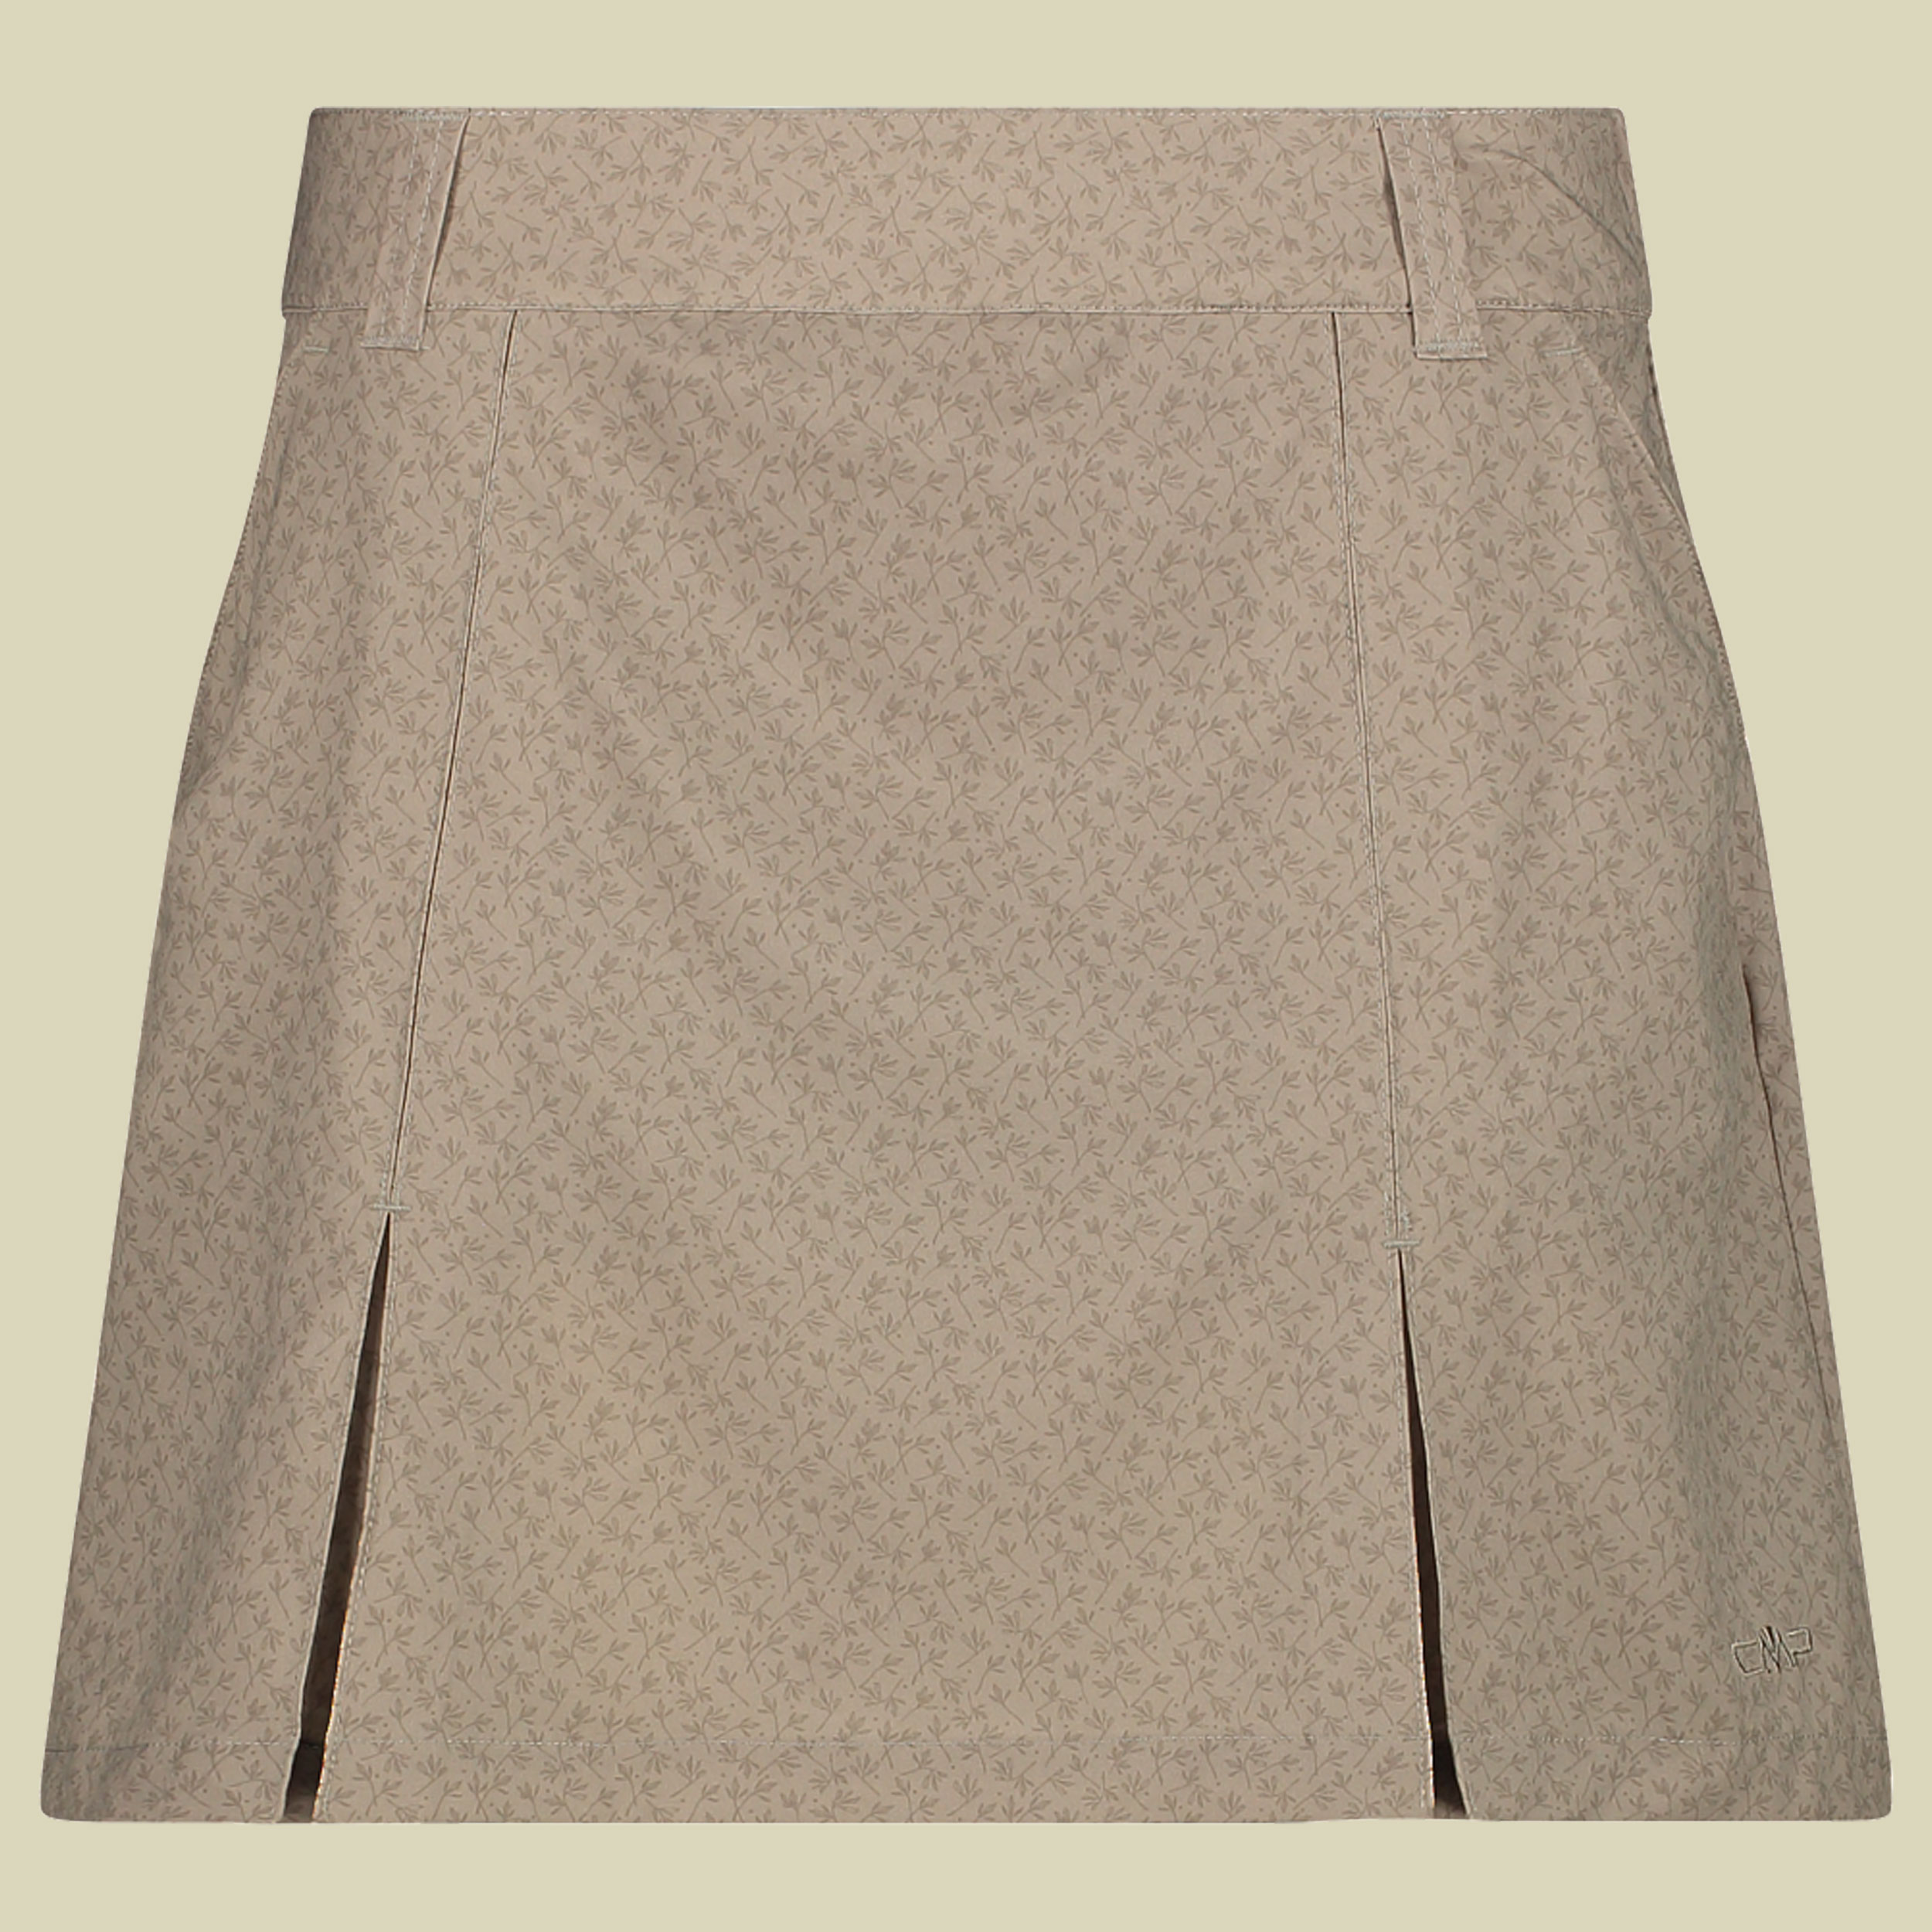 Woman Skirt 2 in 1 Größe 40 Farbe sand P631